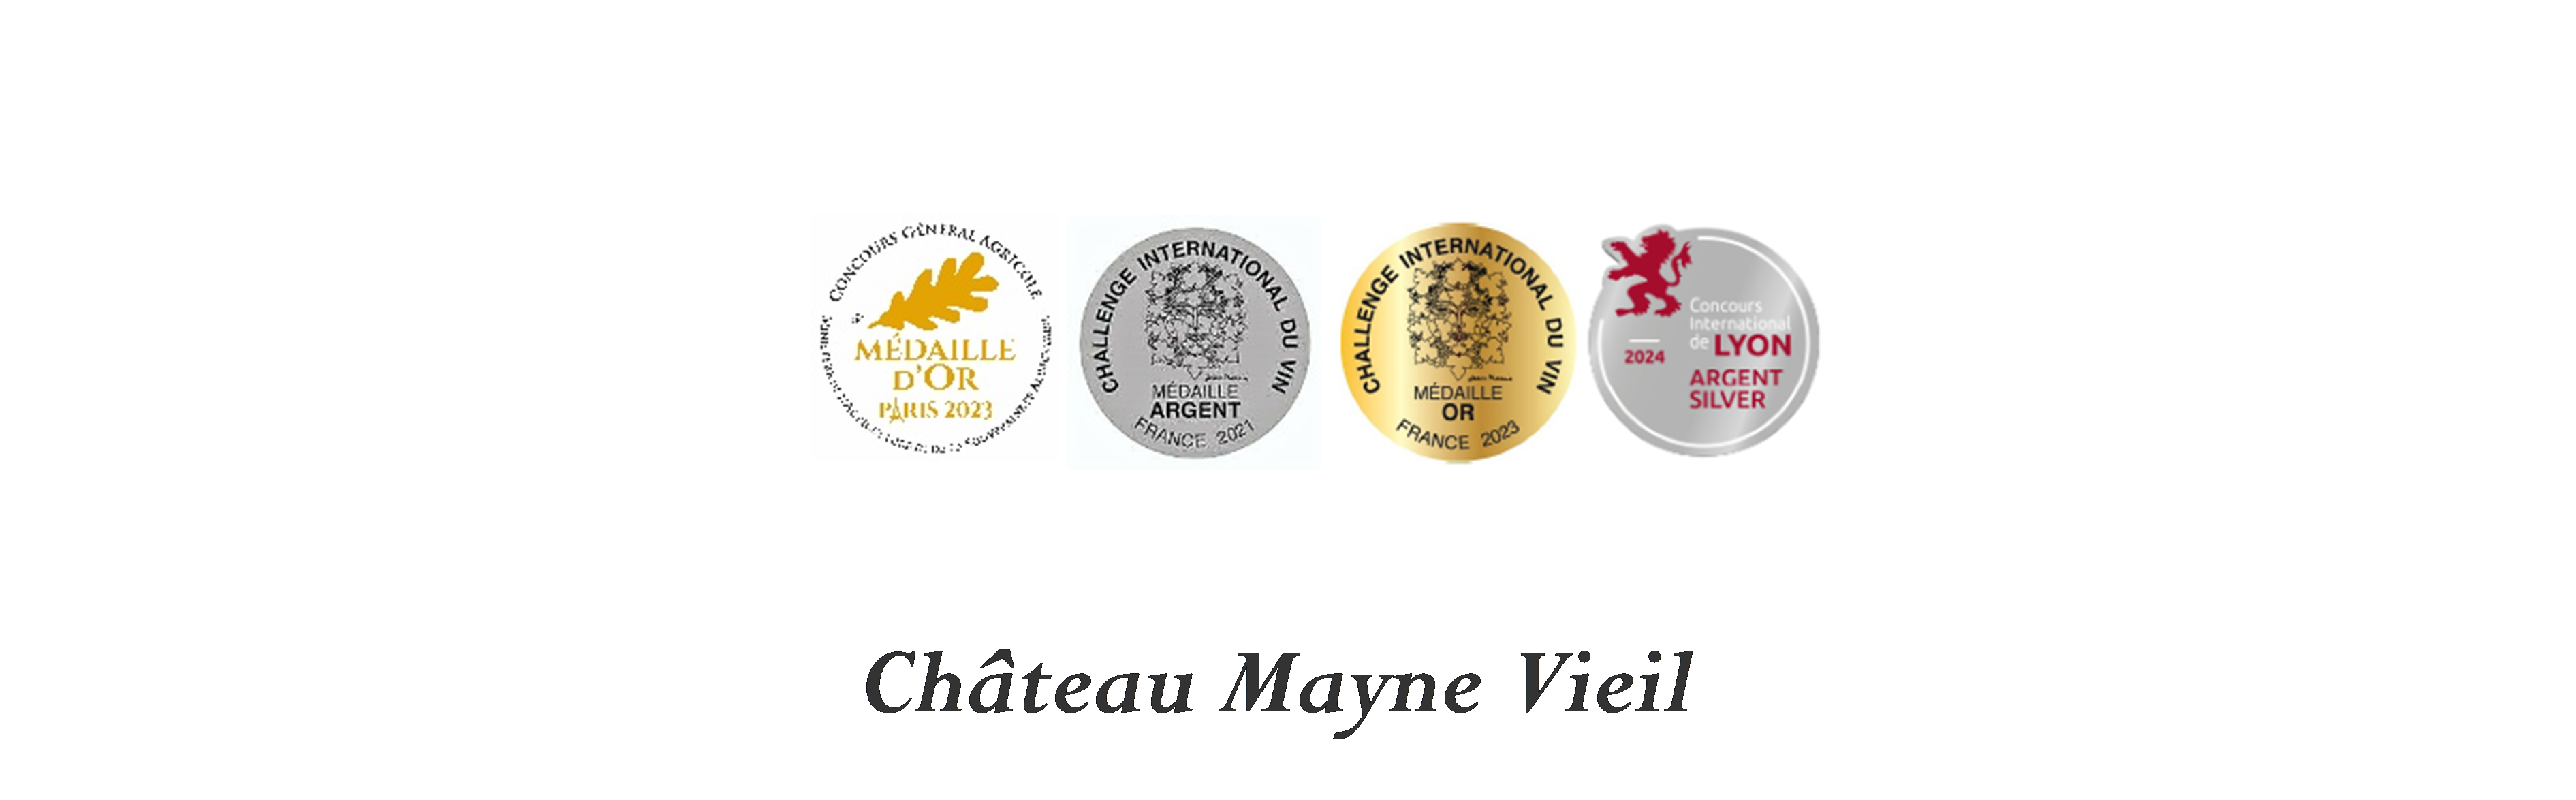 Mdaille_Mayne_Vieil Château Mayne Vieil  - Page 3